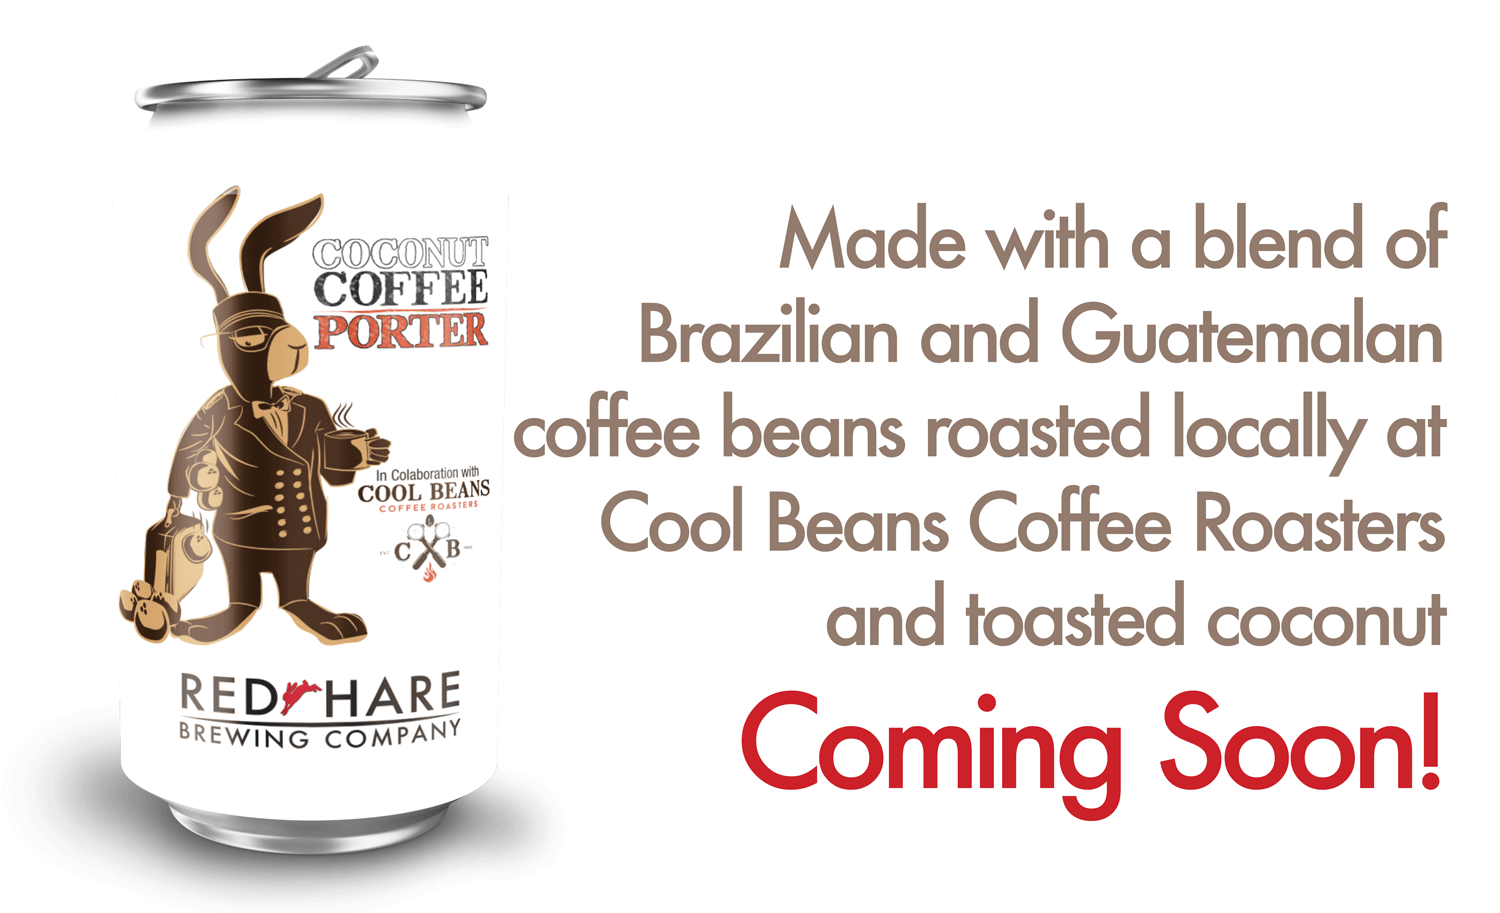 Coconut Coffee Porter Release